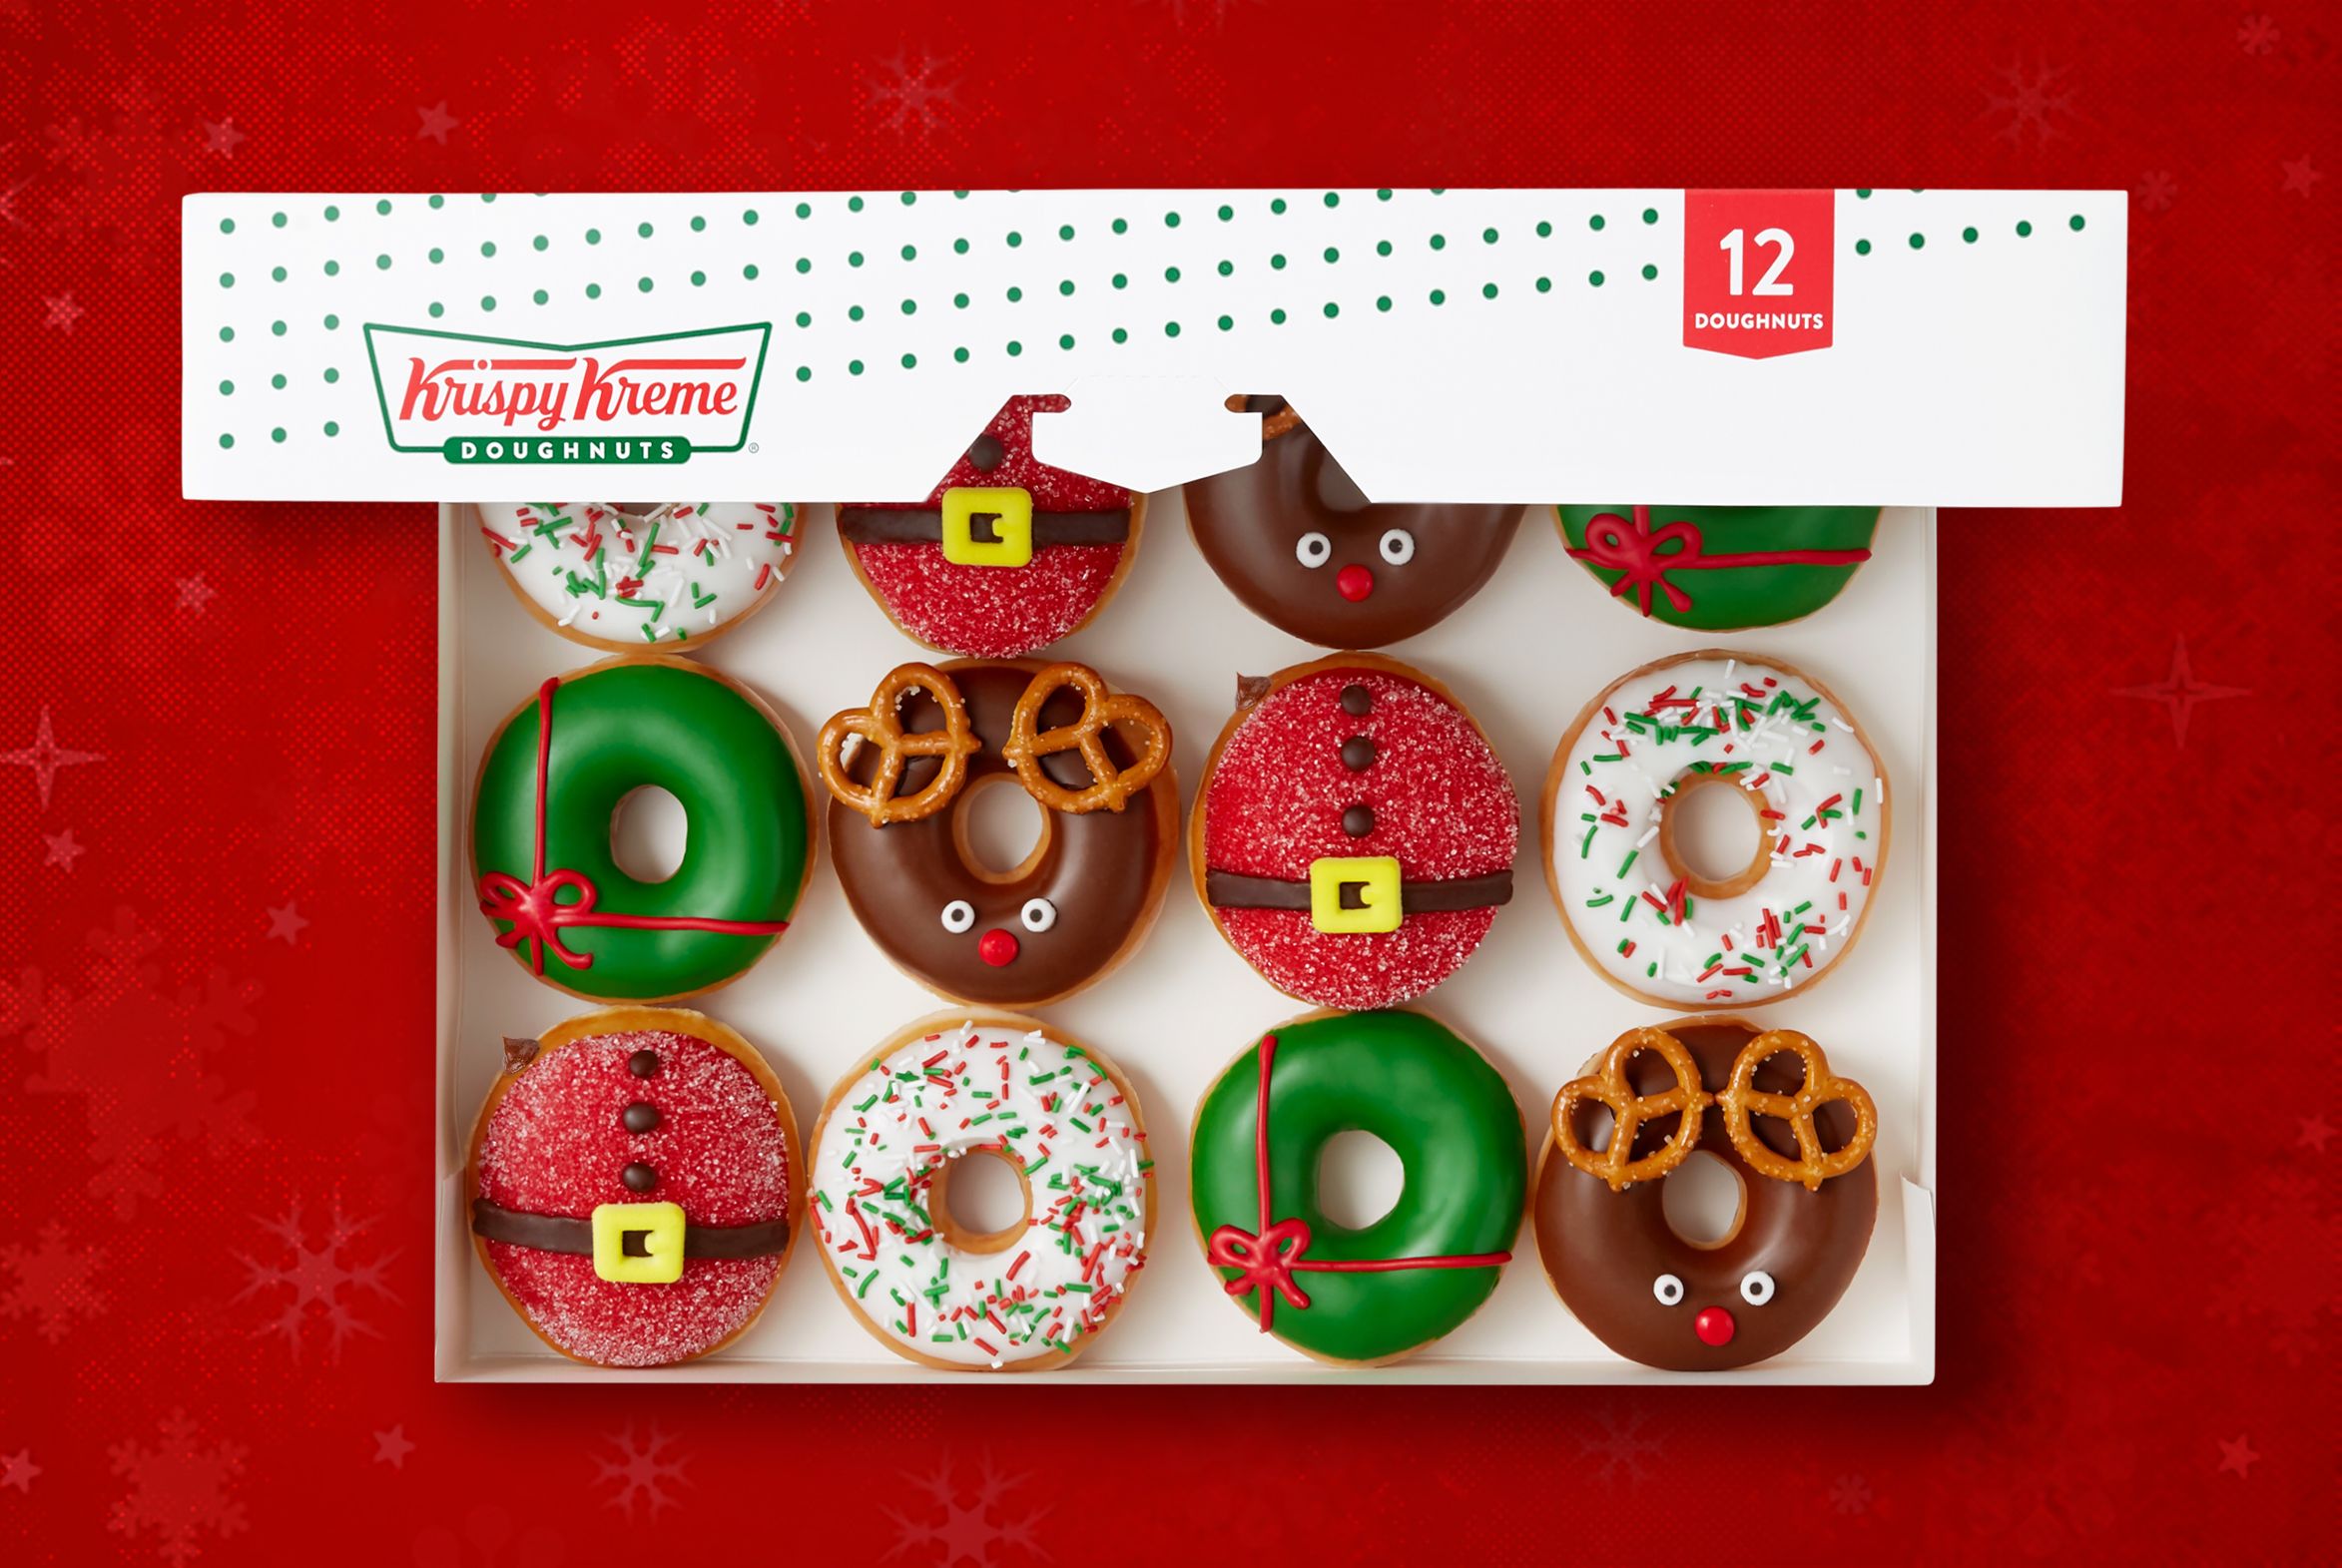 Krispy Kreme Announced Its Christmas Donuts For 2019